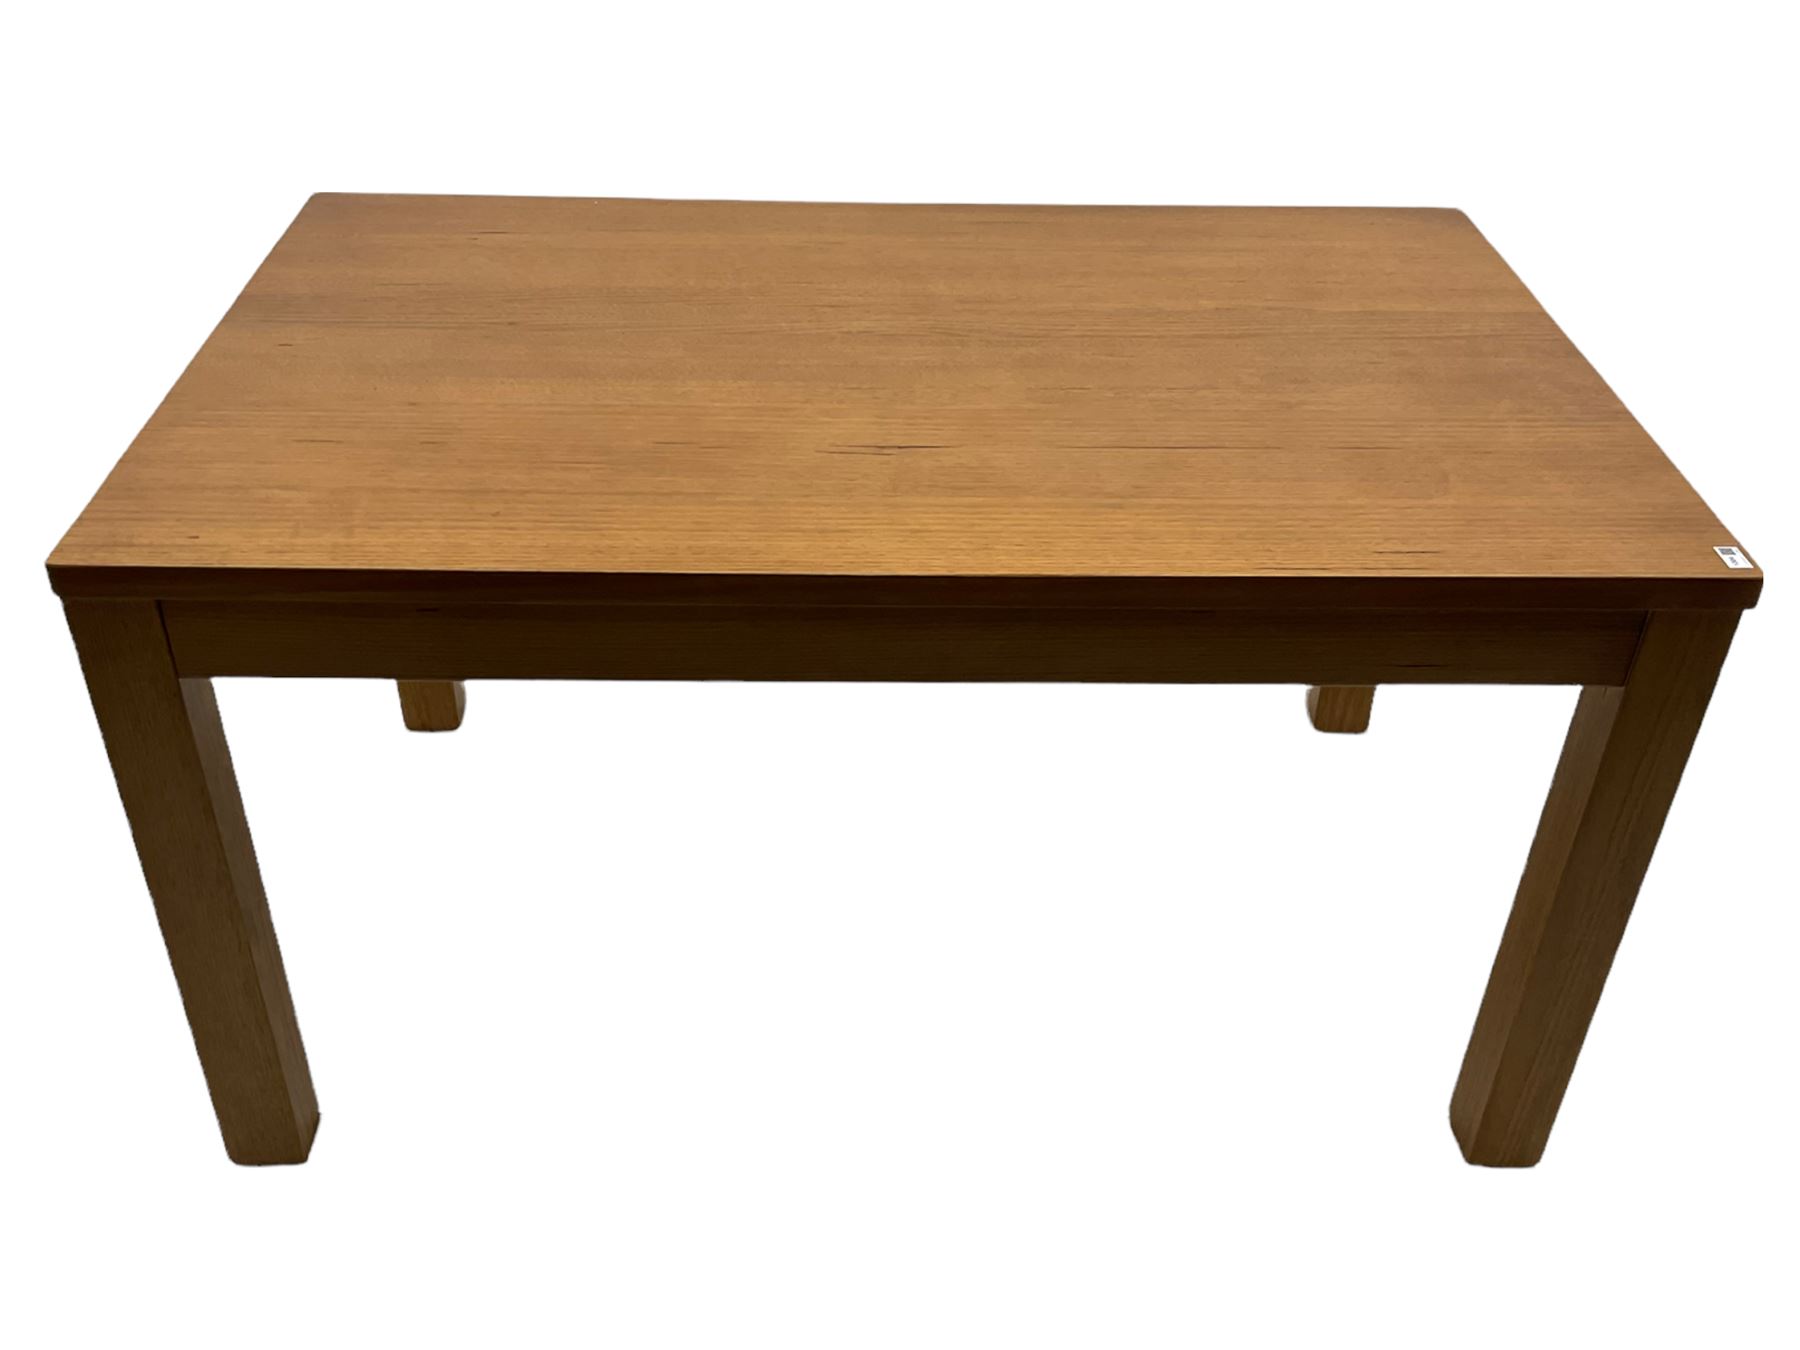 Light oak rectangular dining table - Image 2 of 5